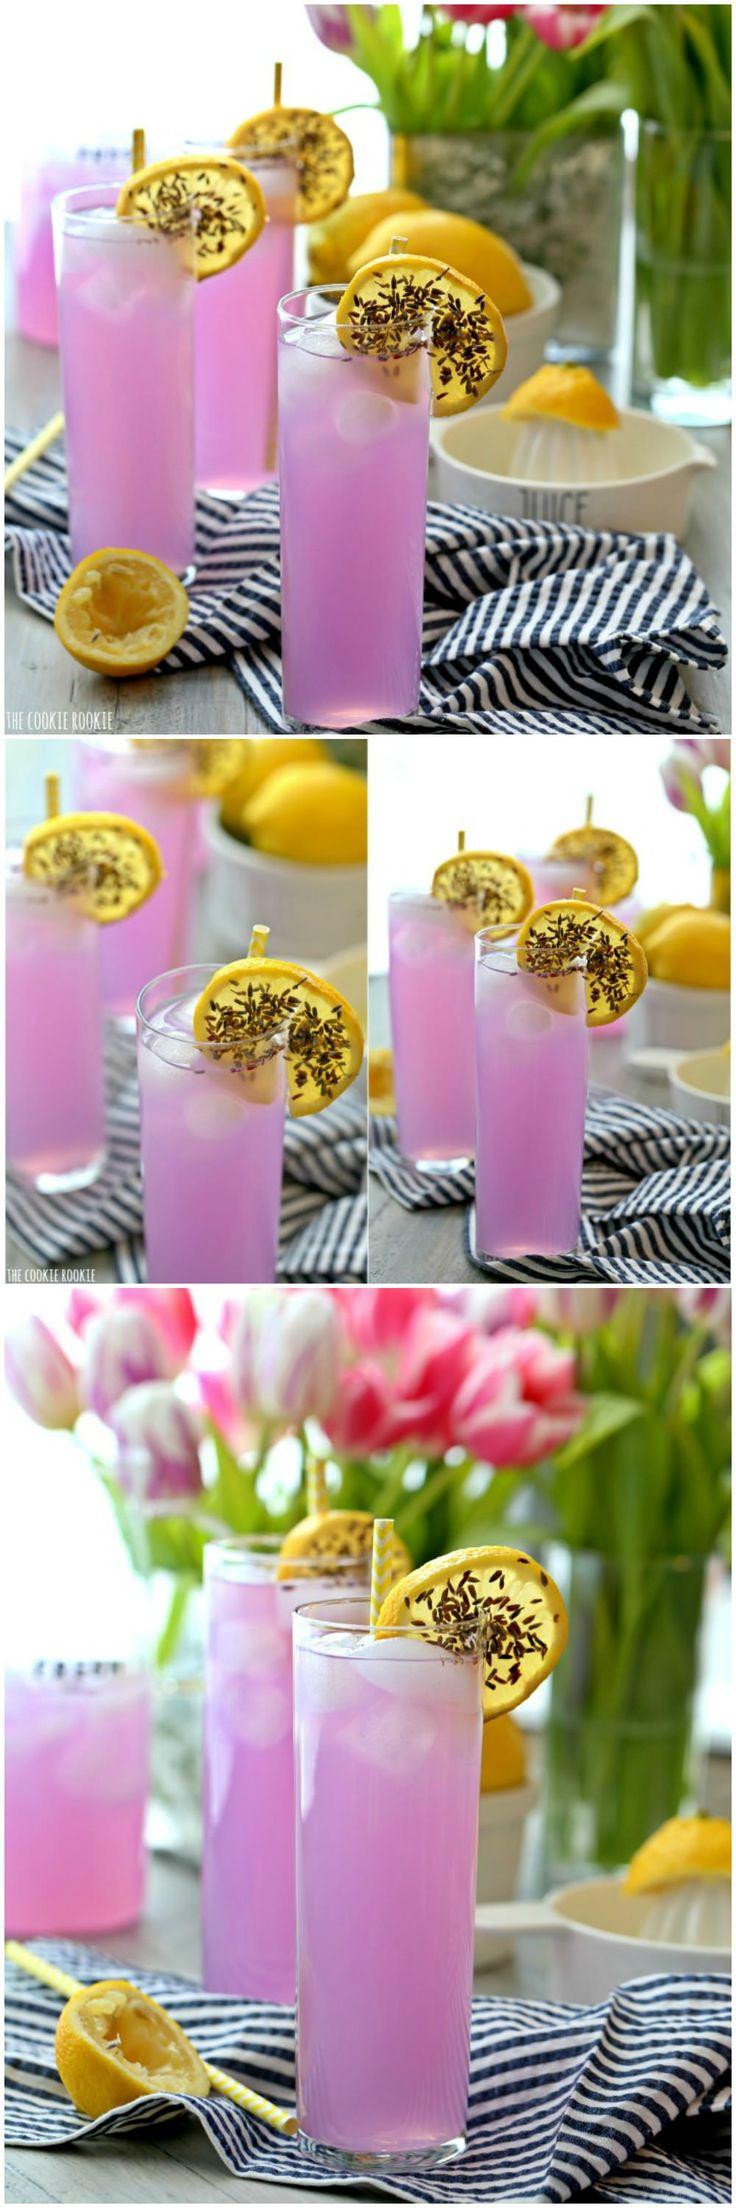 Mariage - Lavender Lemonade